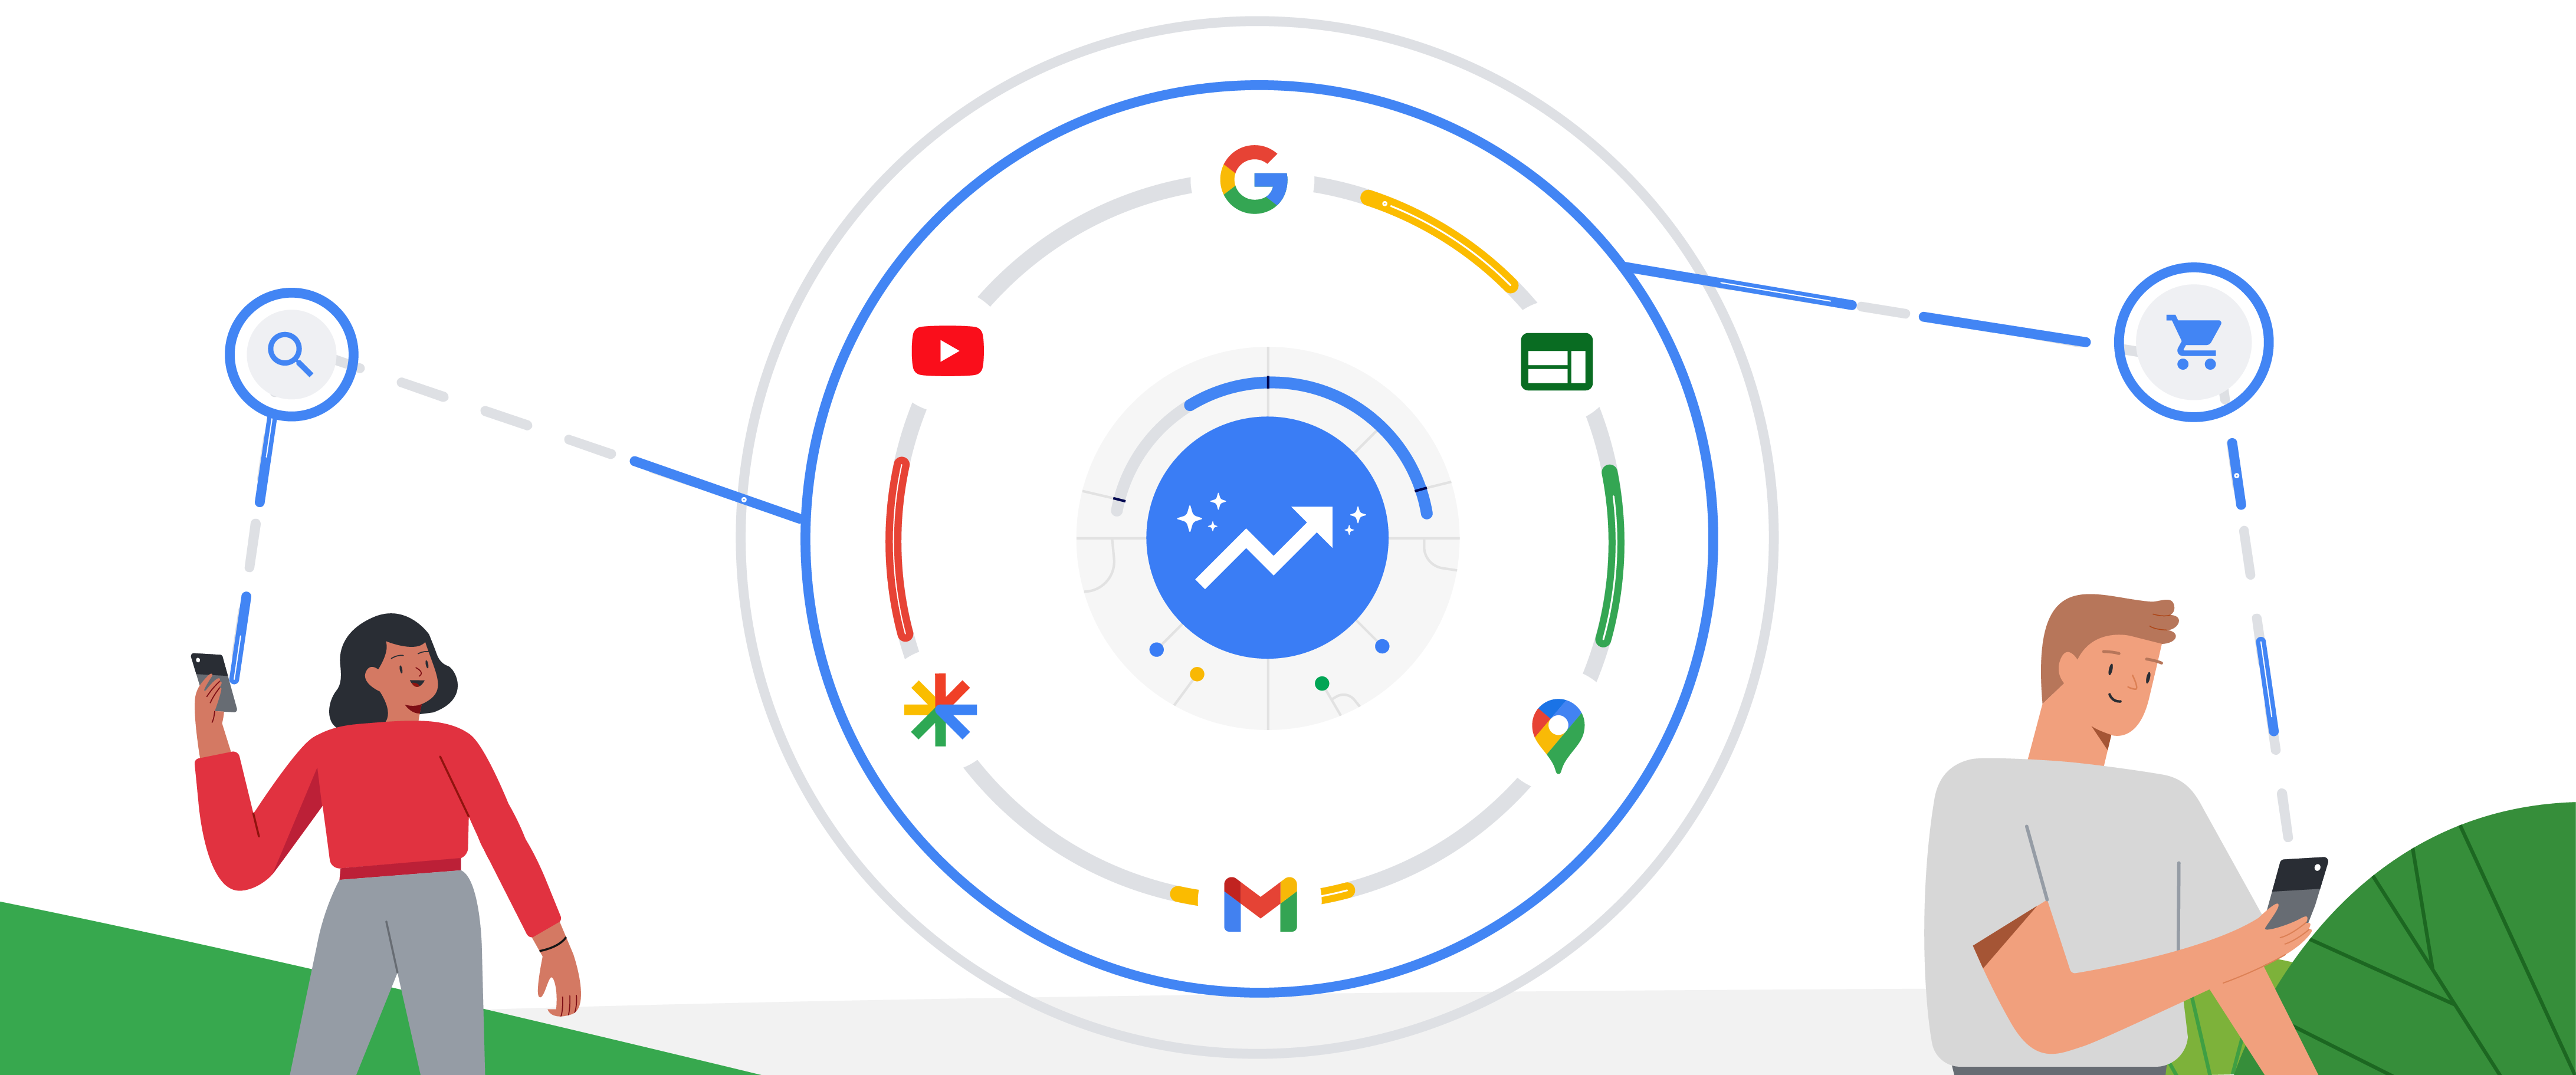 Performance Max di Google Ads